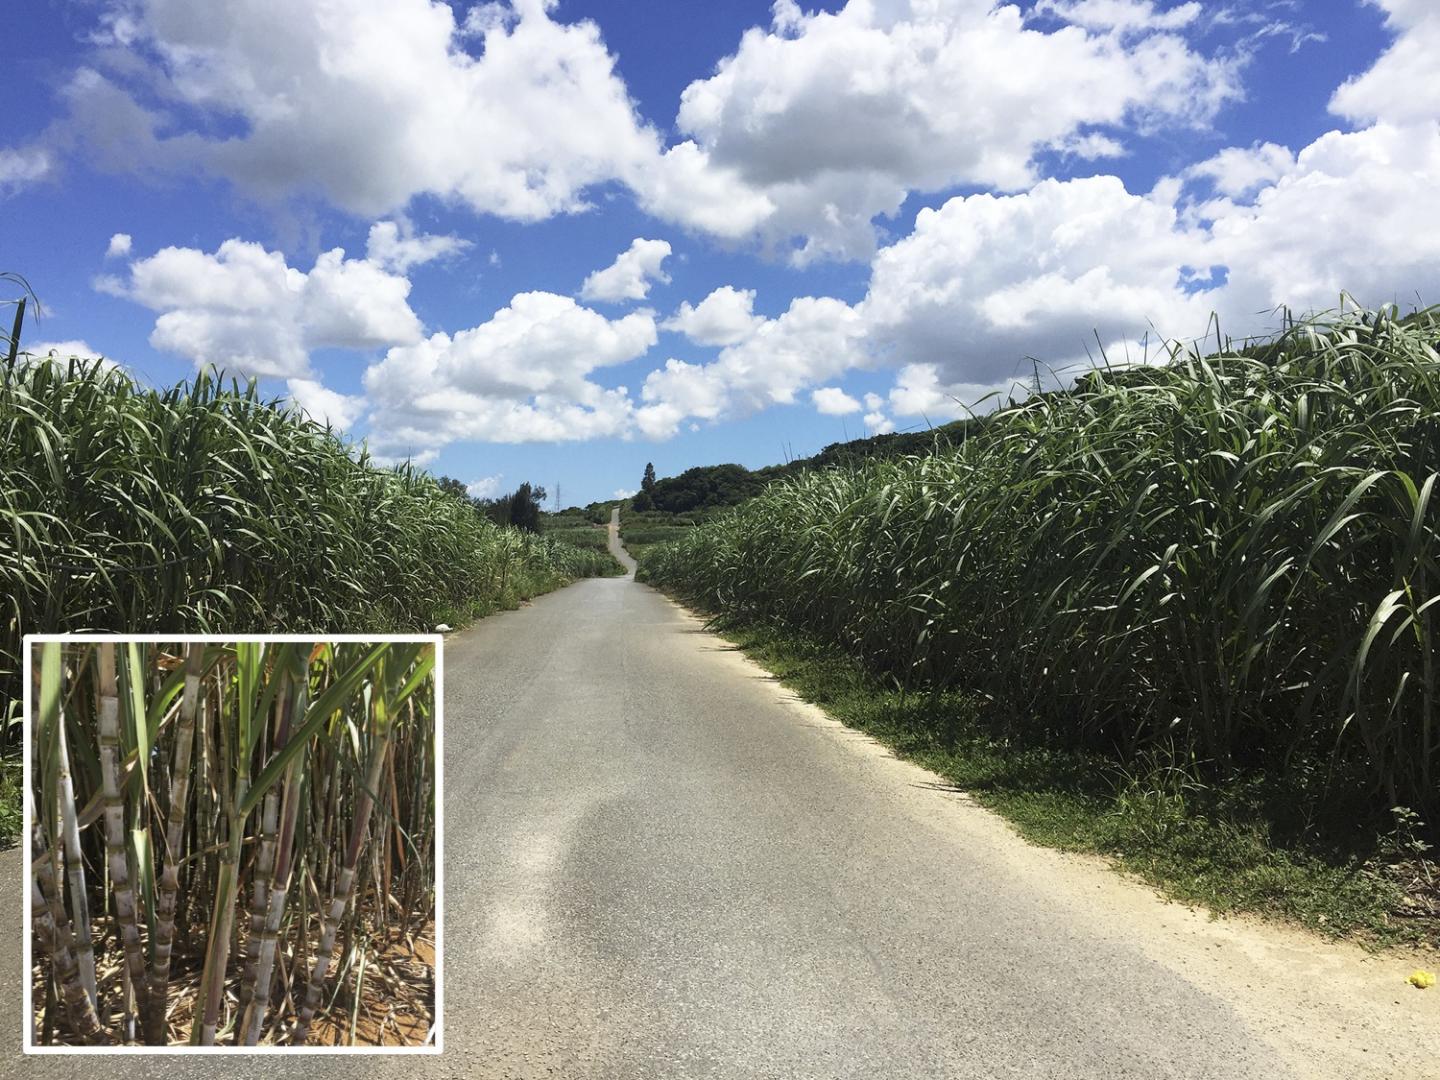 A Sugarcane Field in Okinawa